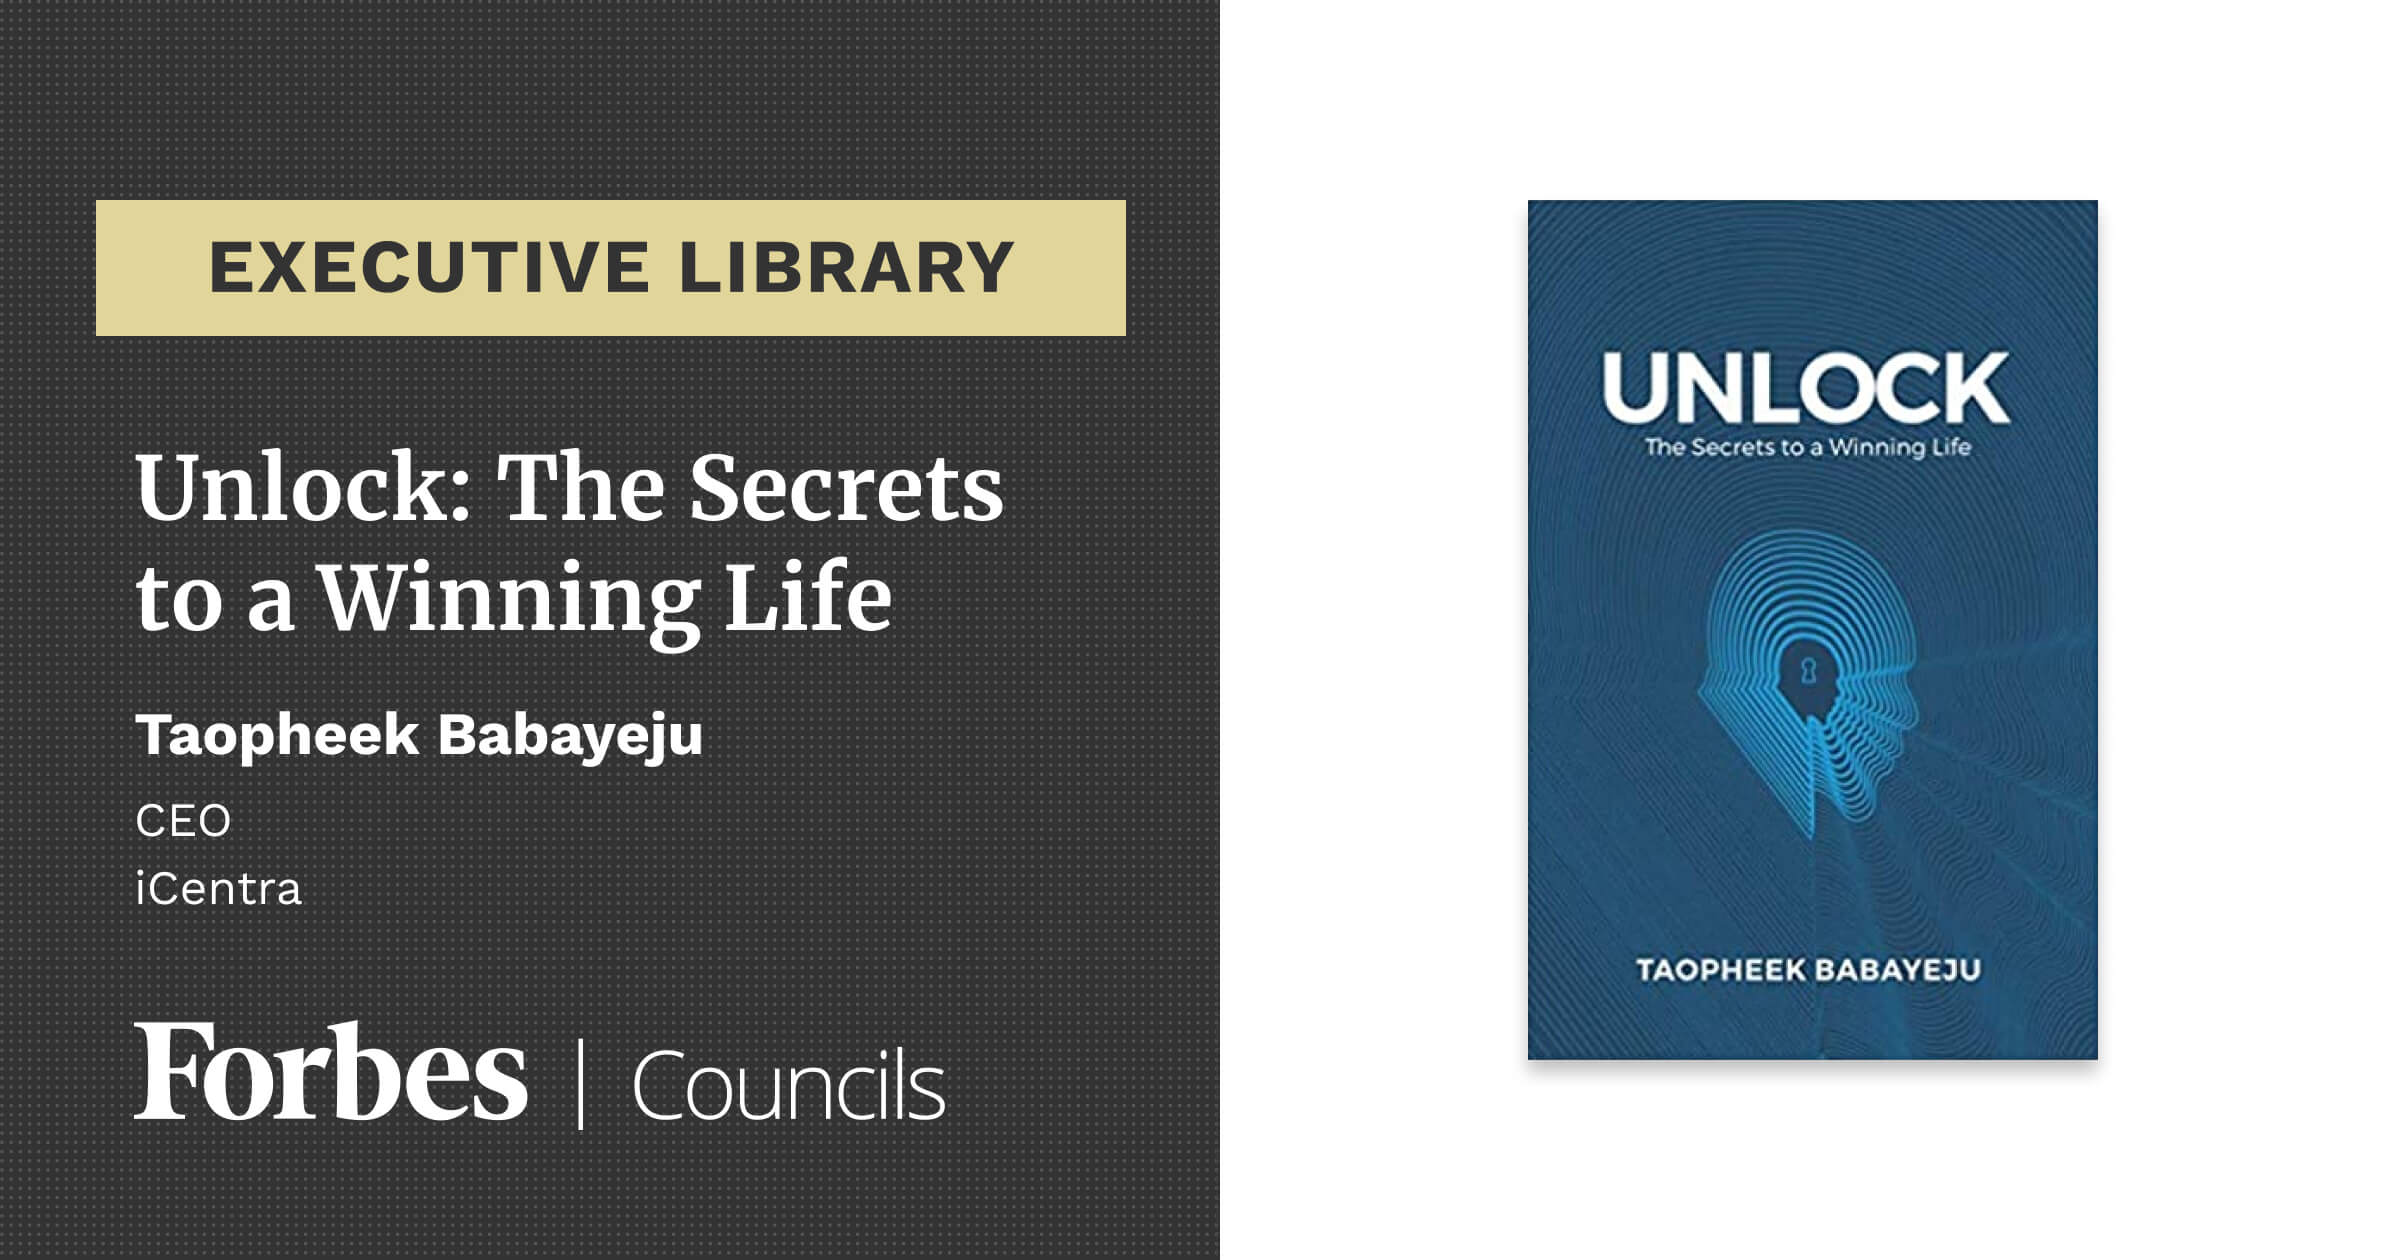 Unlock: The Secrets to a Winning Life by Taopheek Babayeju